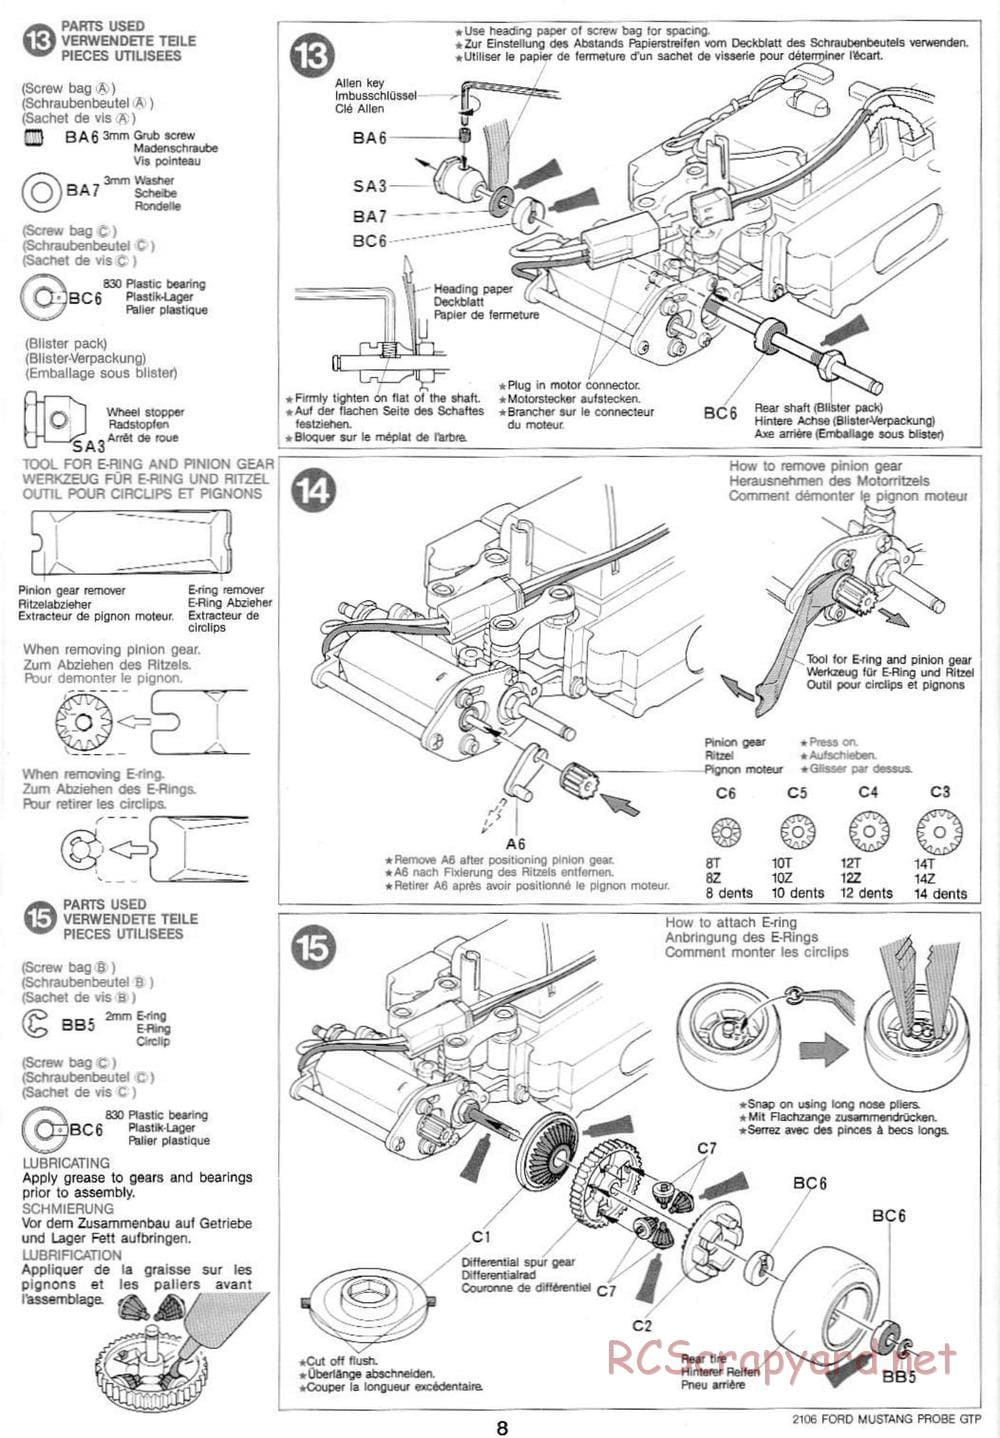 Tamiya - Tamtech - Ford Mustang Probe GTP Chassis - Manual - Page 8